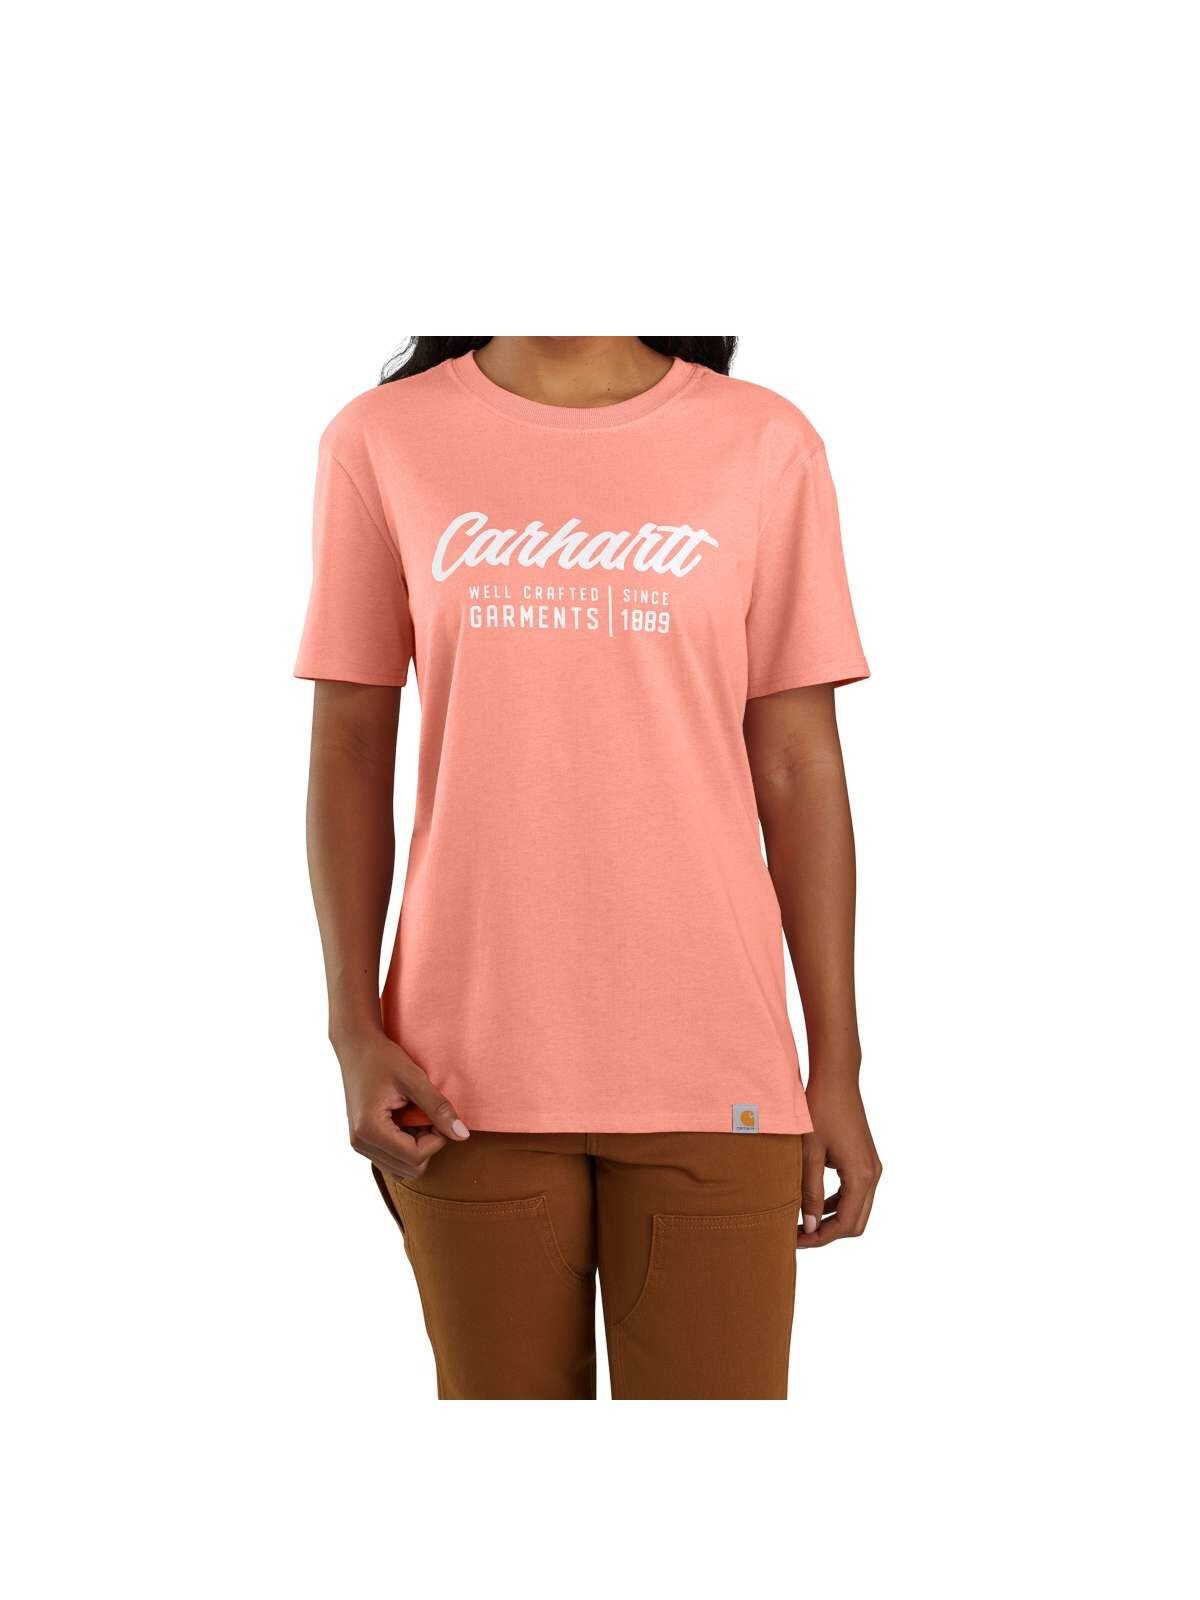 T-shirt Carhartt hibiscus T-Shirt Carhartt heather Graphic